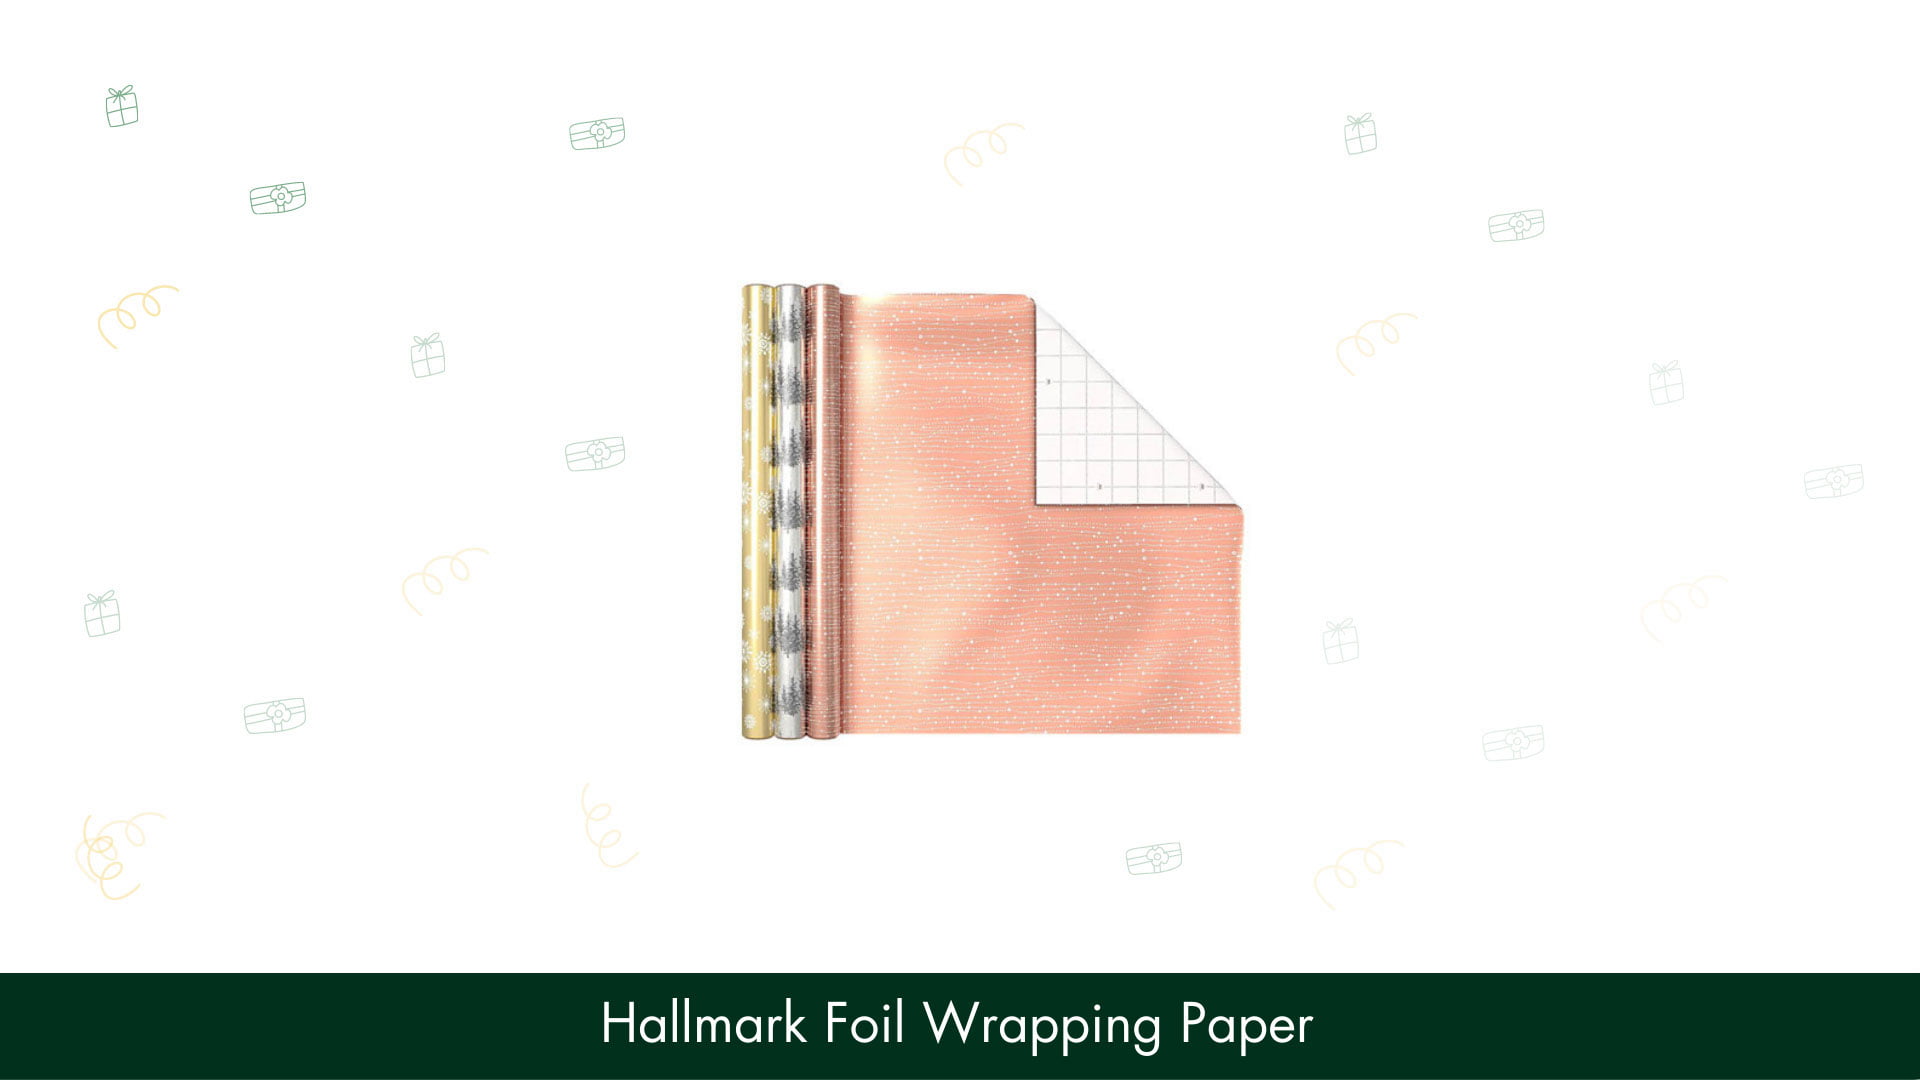 Hallmark Foil